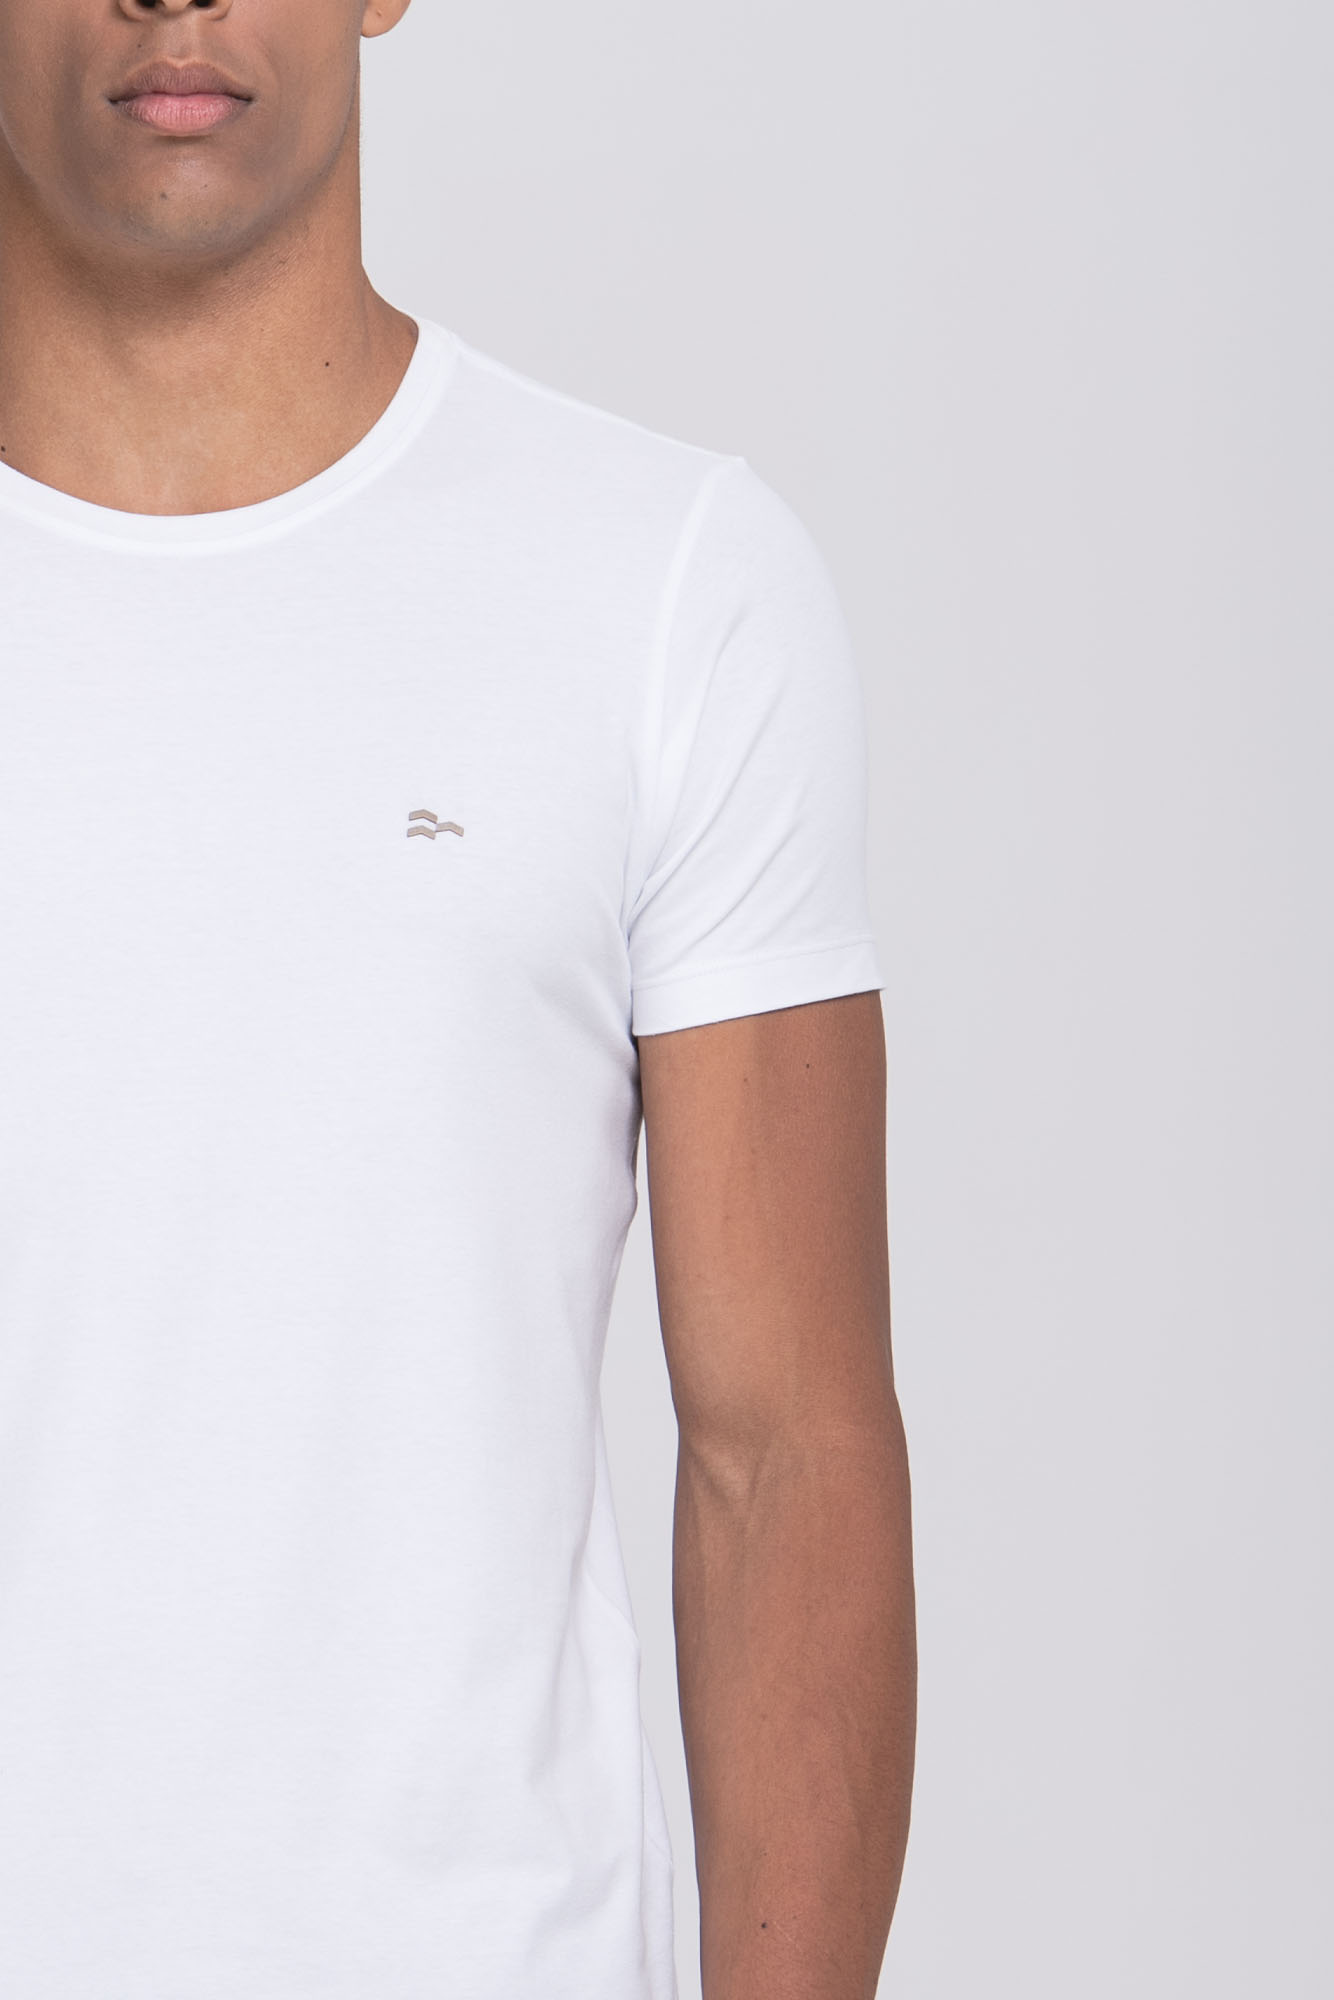 Camiseta Basic Egypt Branco/Marrom